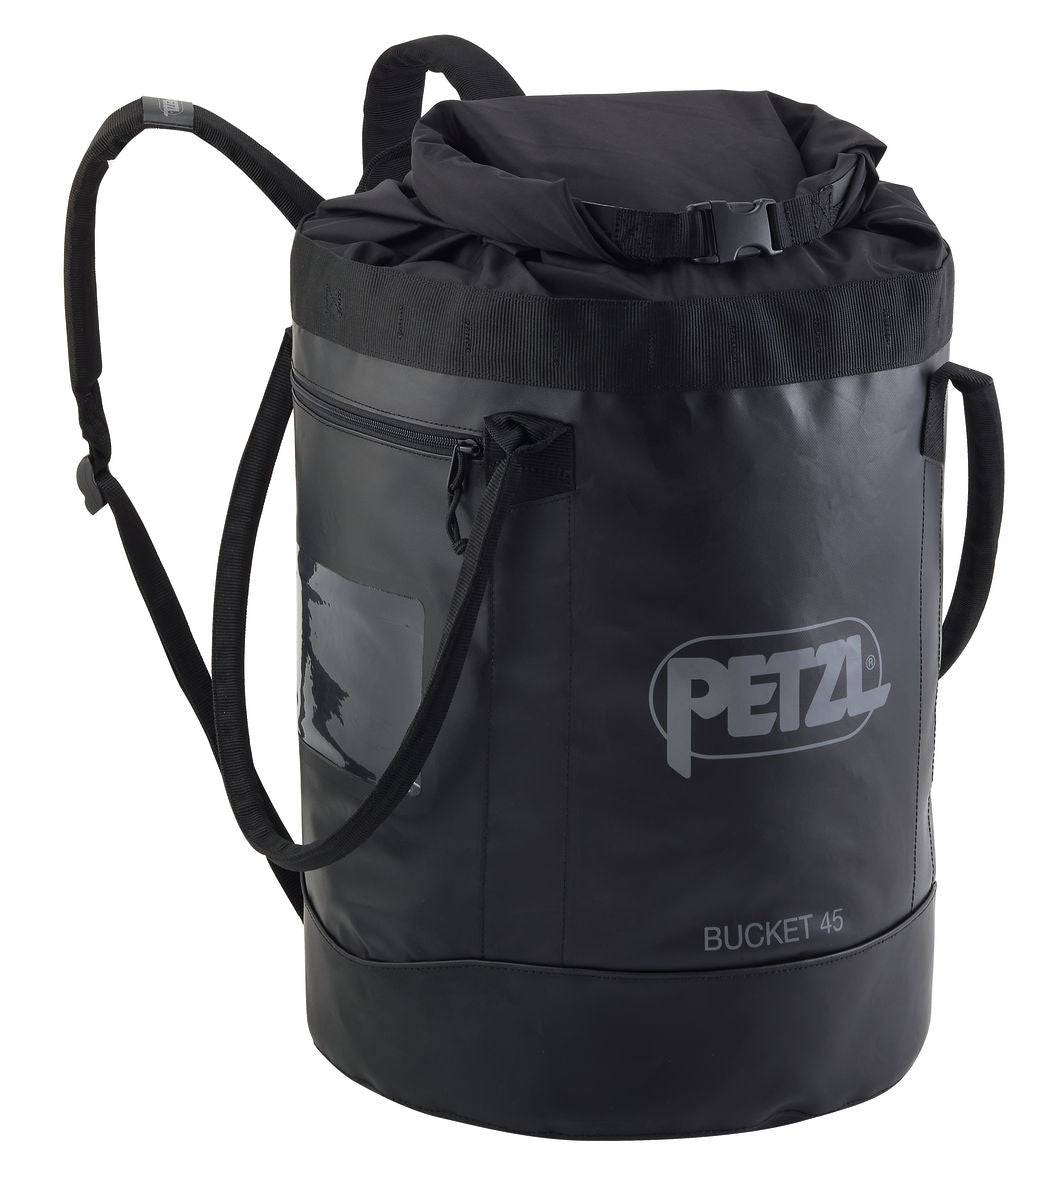 Petzl BUCKET 45L Large Capacity Freestanding Bag - SecureHeights